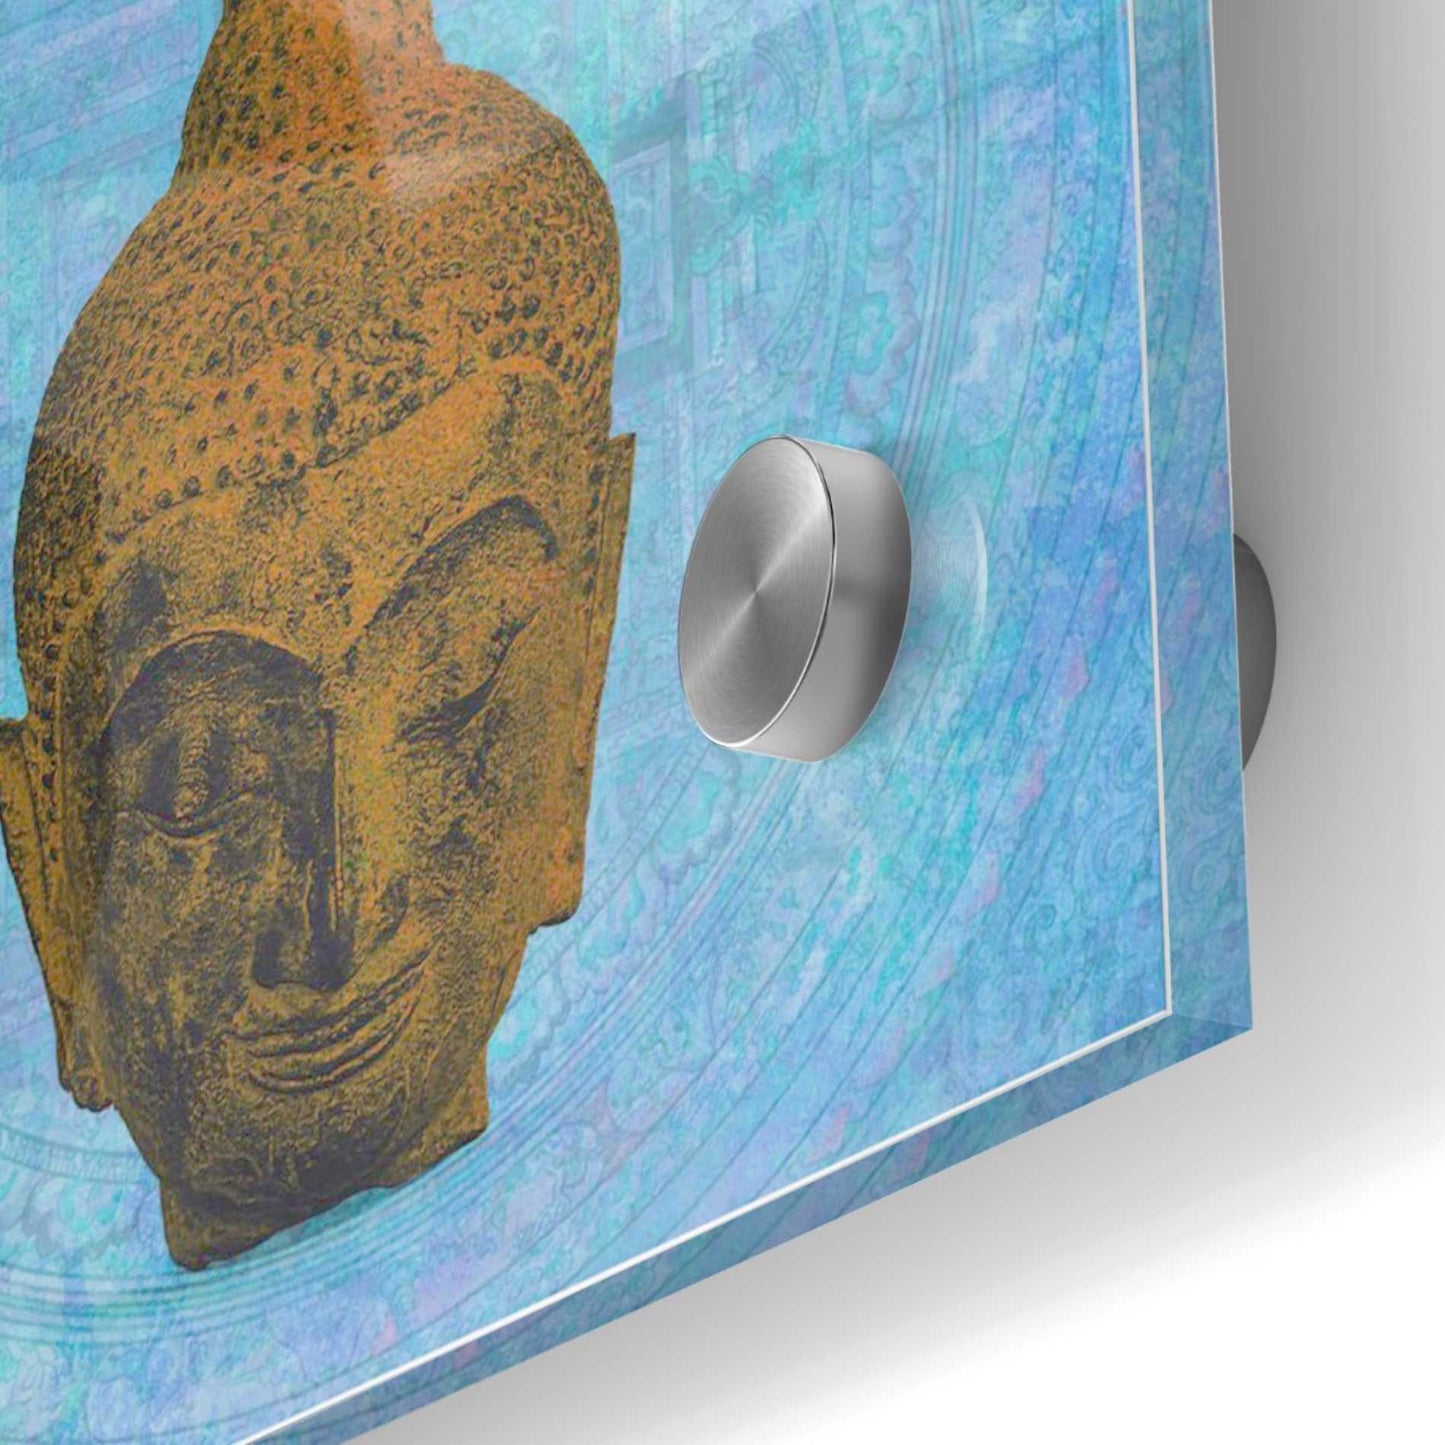 Epic Art 'Buddha on Blue' by Elena Ray Acrylic Glass Wall Art,24x24